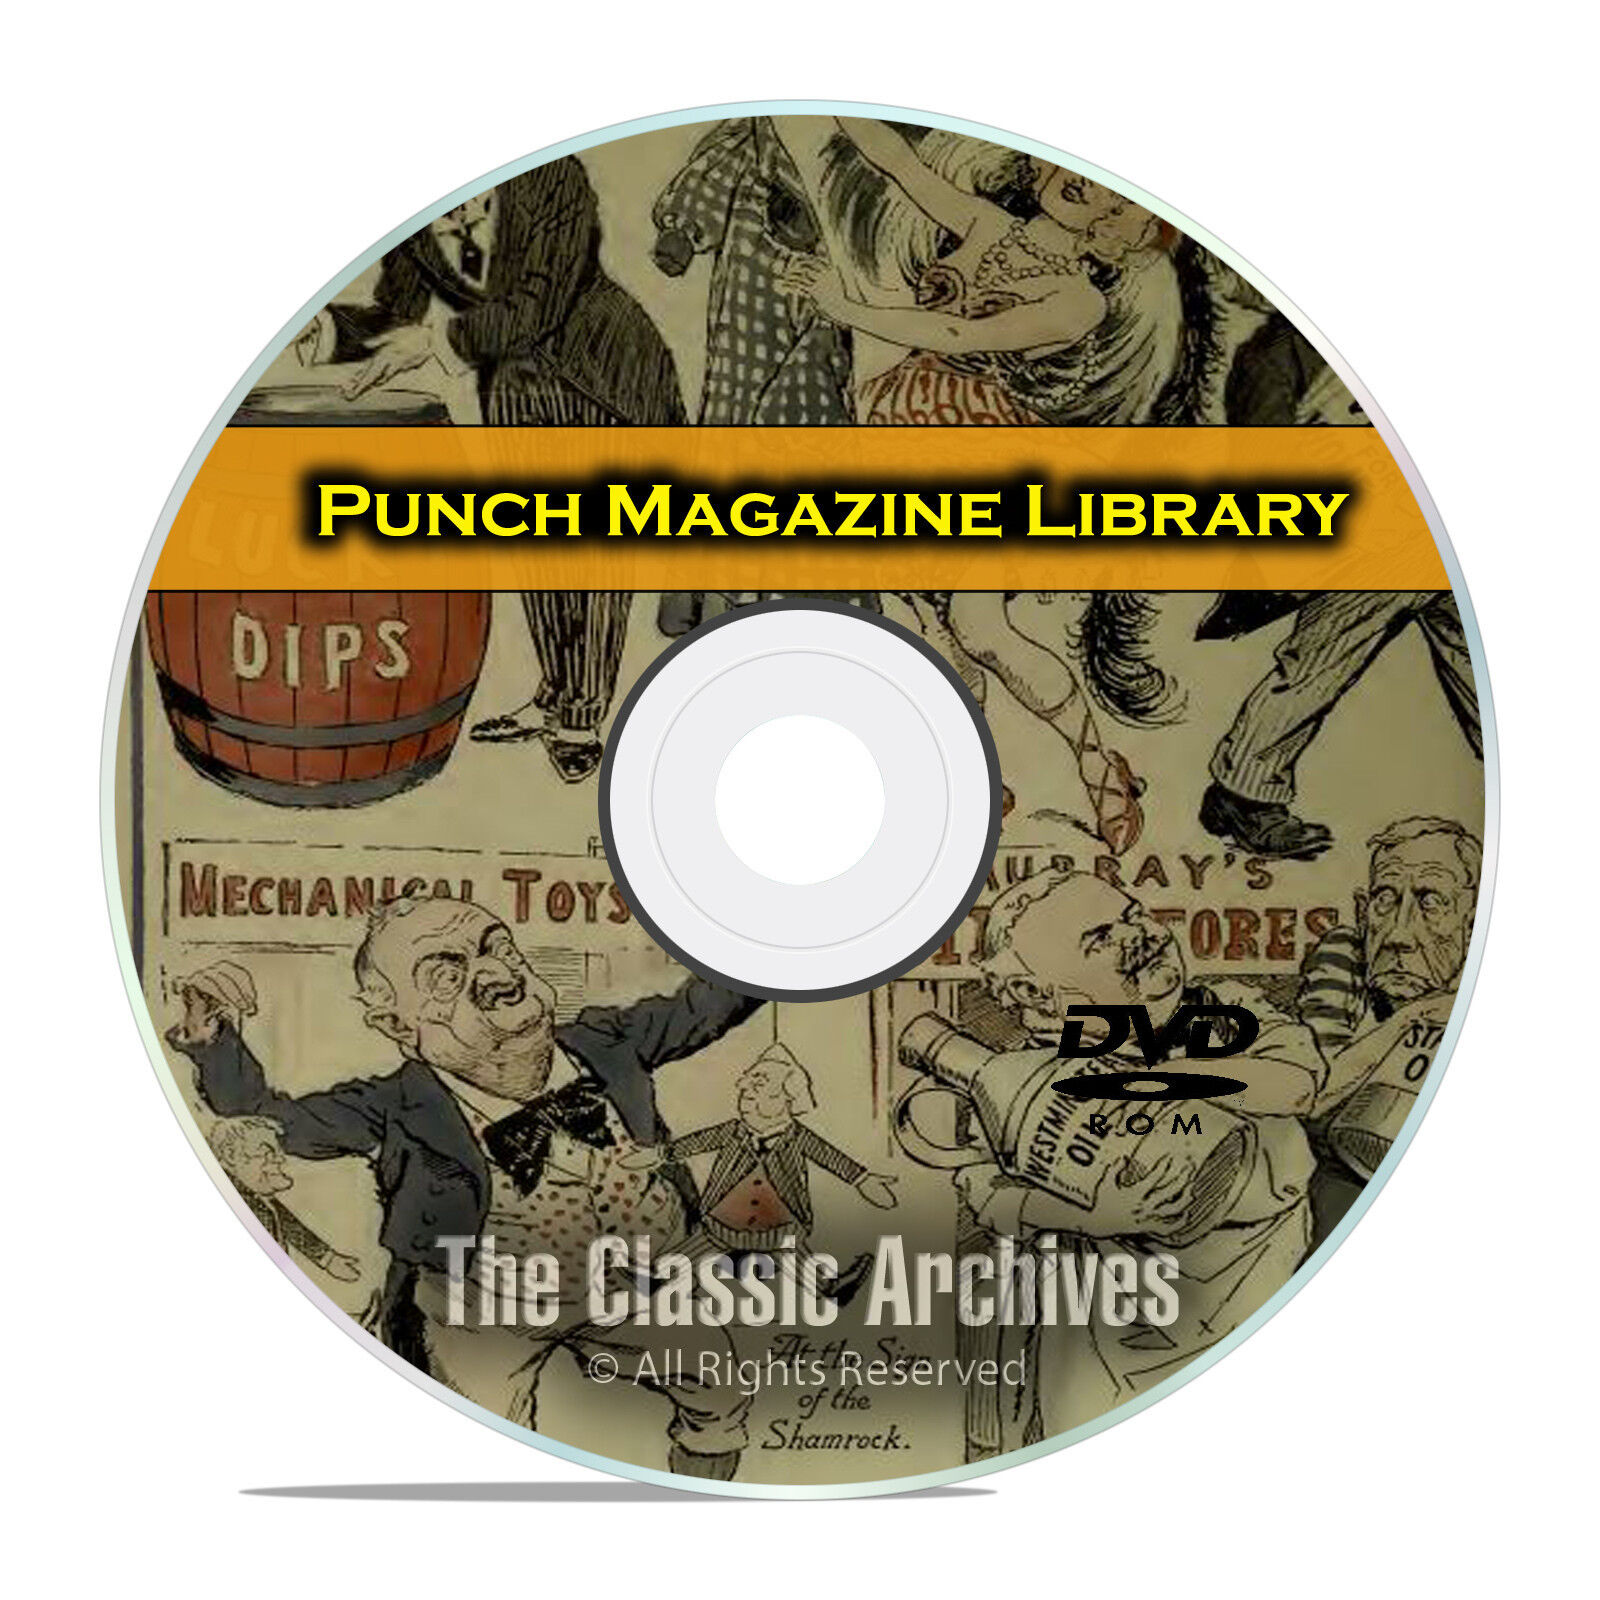 Punch Magazine, British Humor Comics Satire, 78 Volumes, 2028 Issues DVD E43